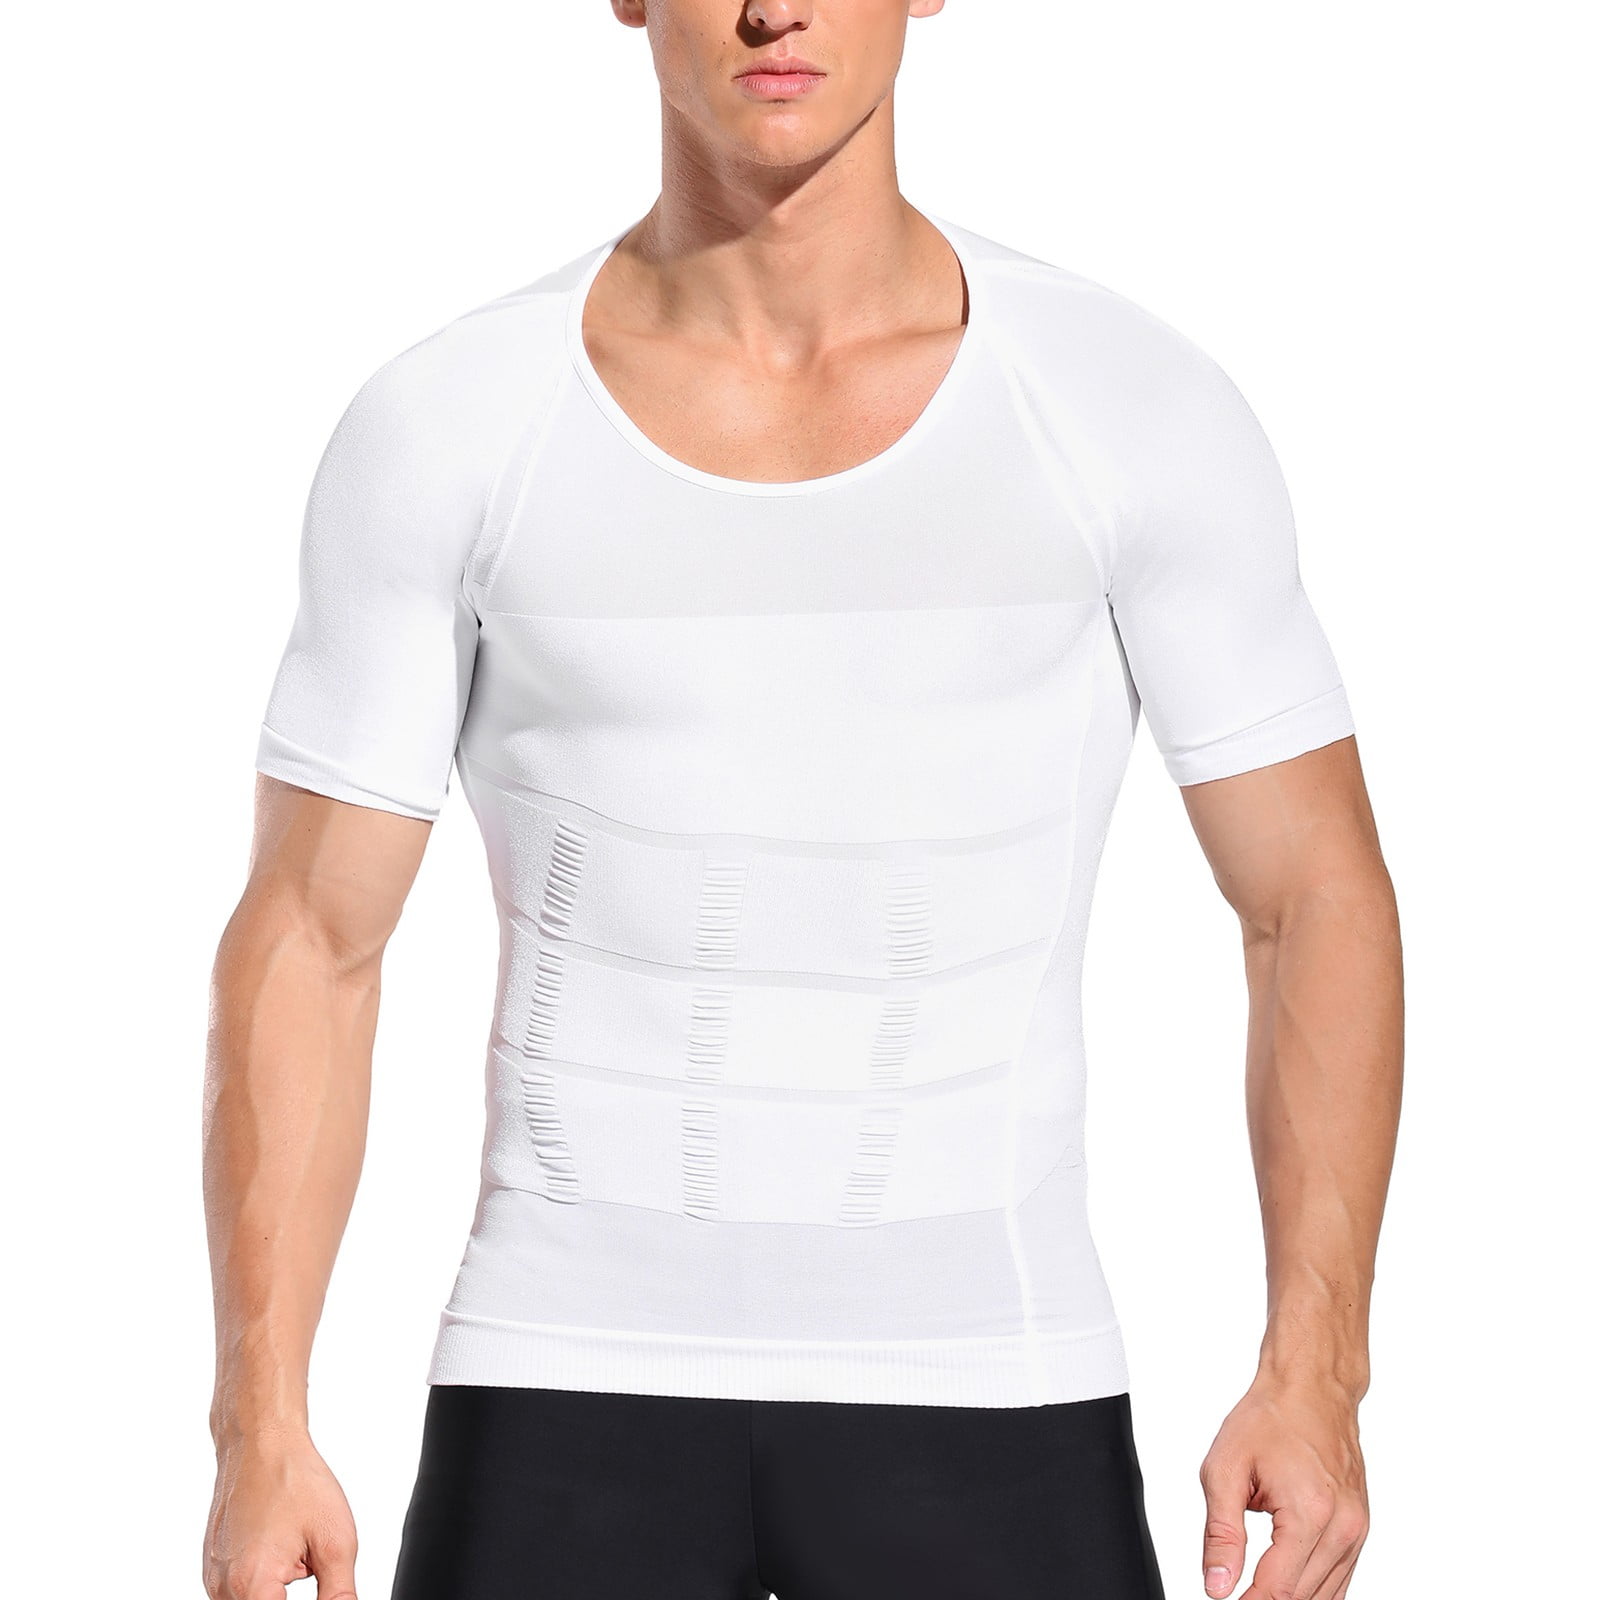 FITTOO Men Compression Shirt Underwear Slimming Tank Top Workout Top ...